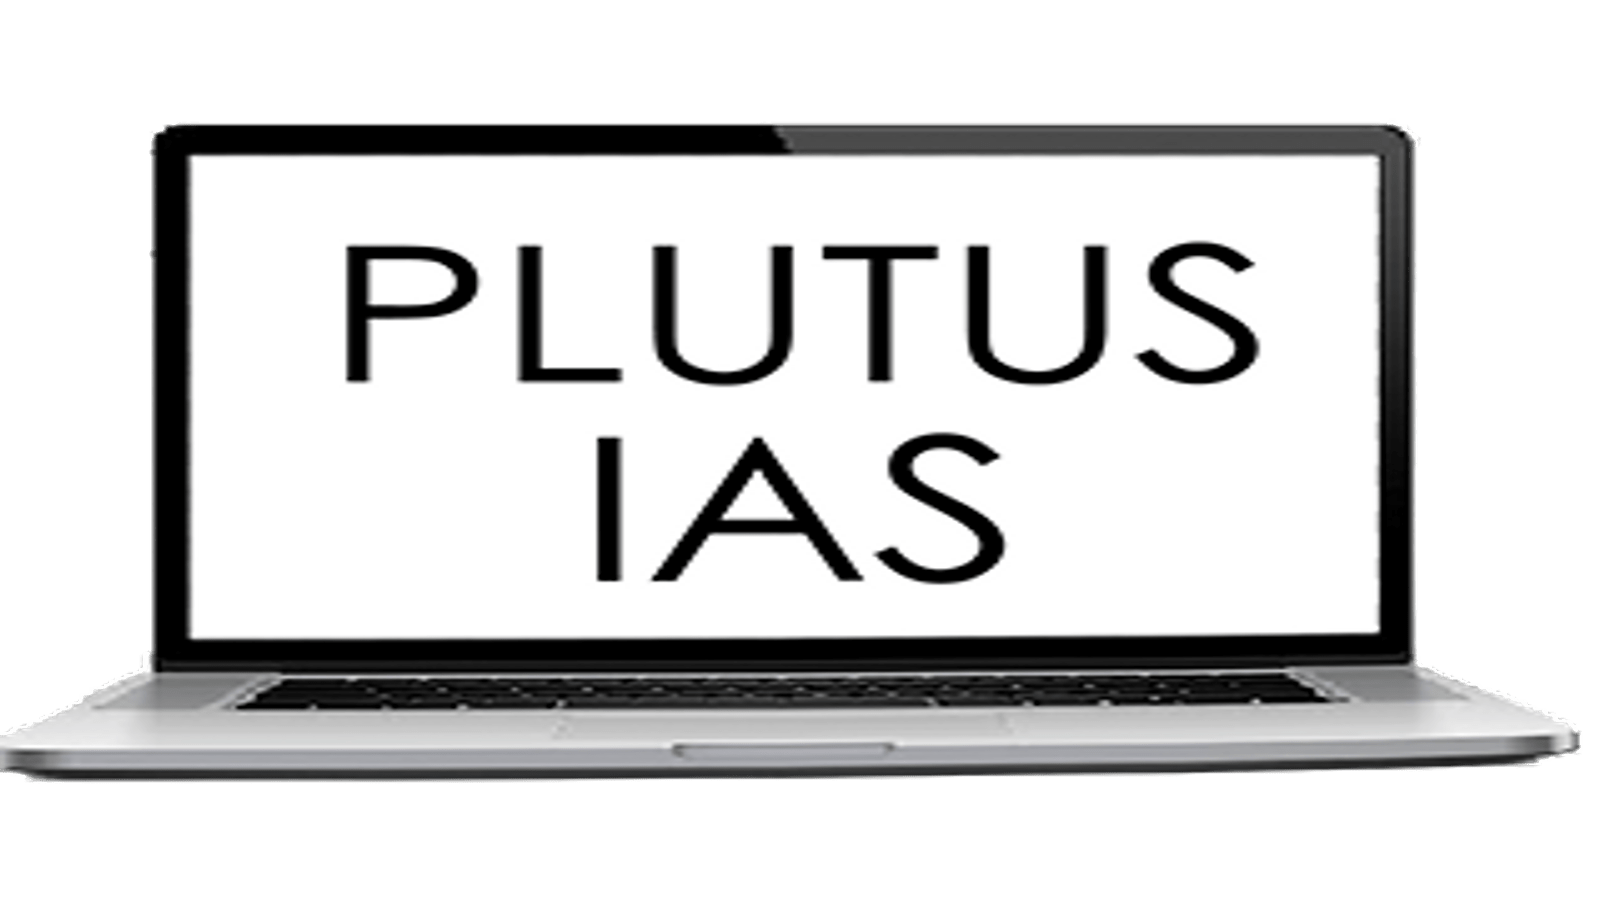 Plutus IAS Online Coaching Varanasi